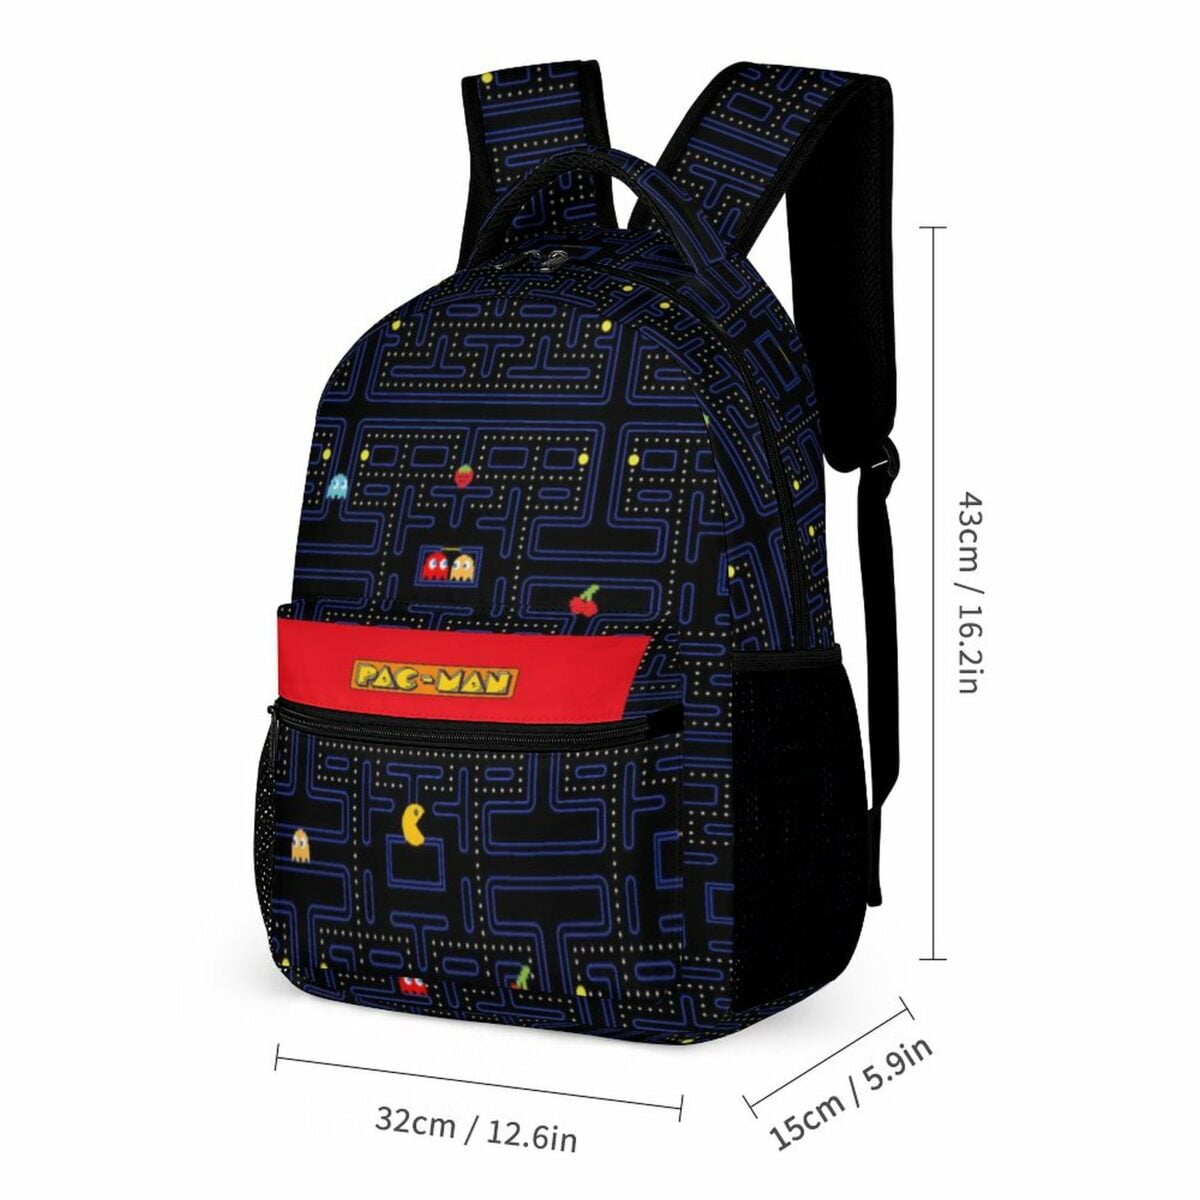 Pac-Man Retro Videogame Black Backpack Lightweight Waterproof Adjustable Straps Cool Kiddo 24